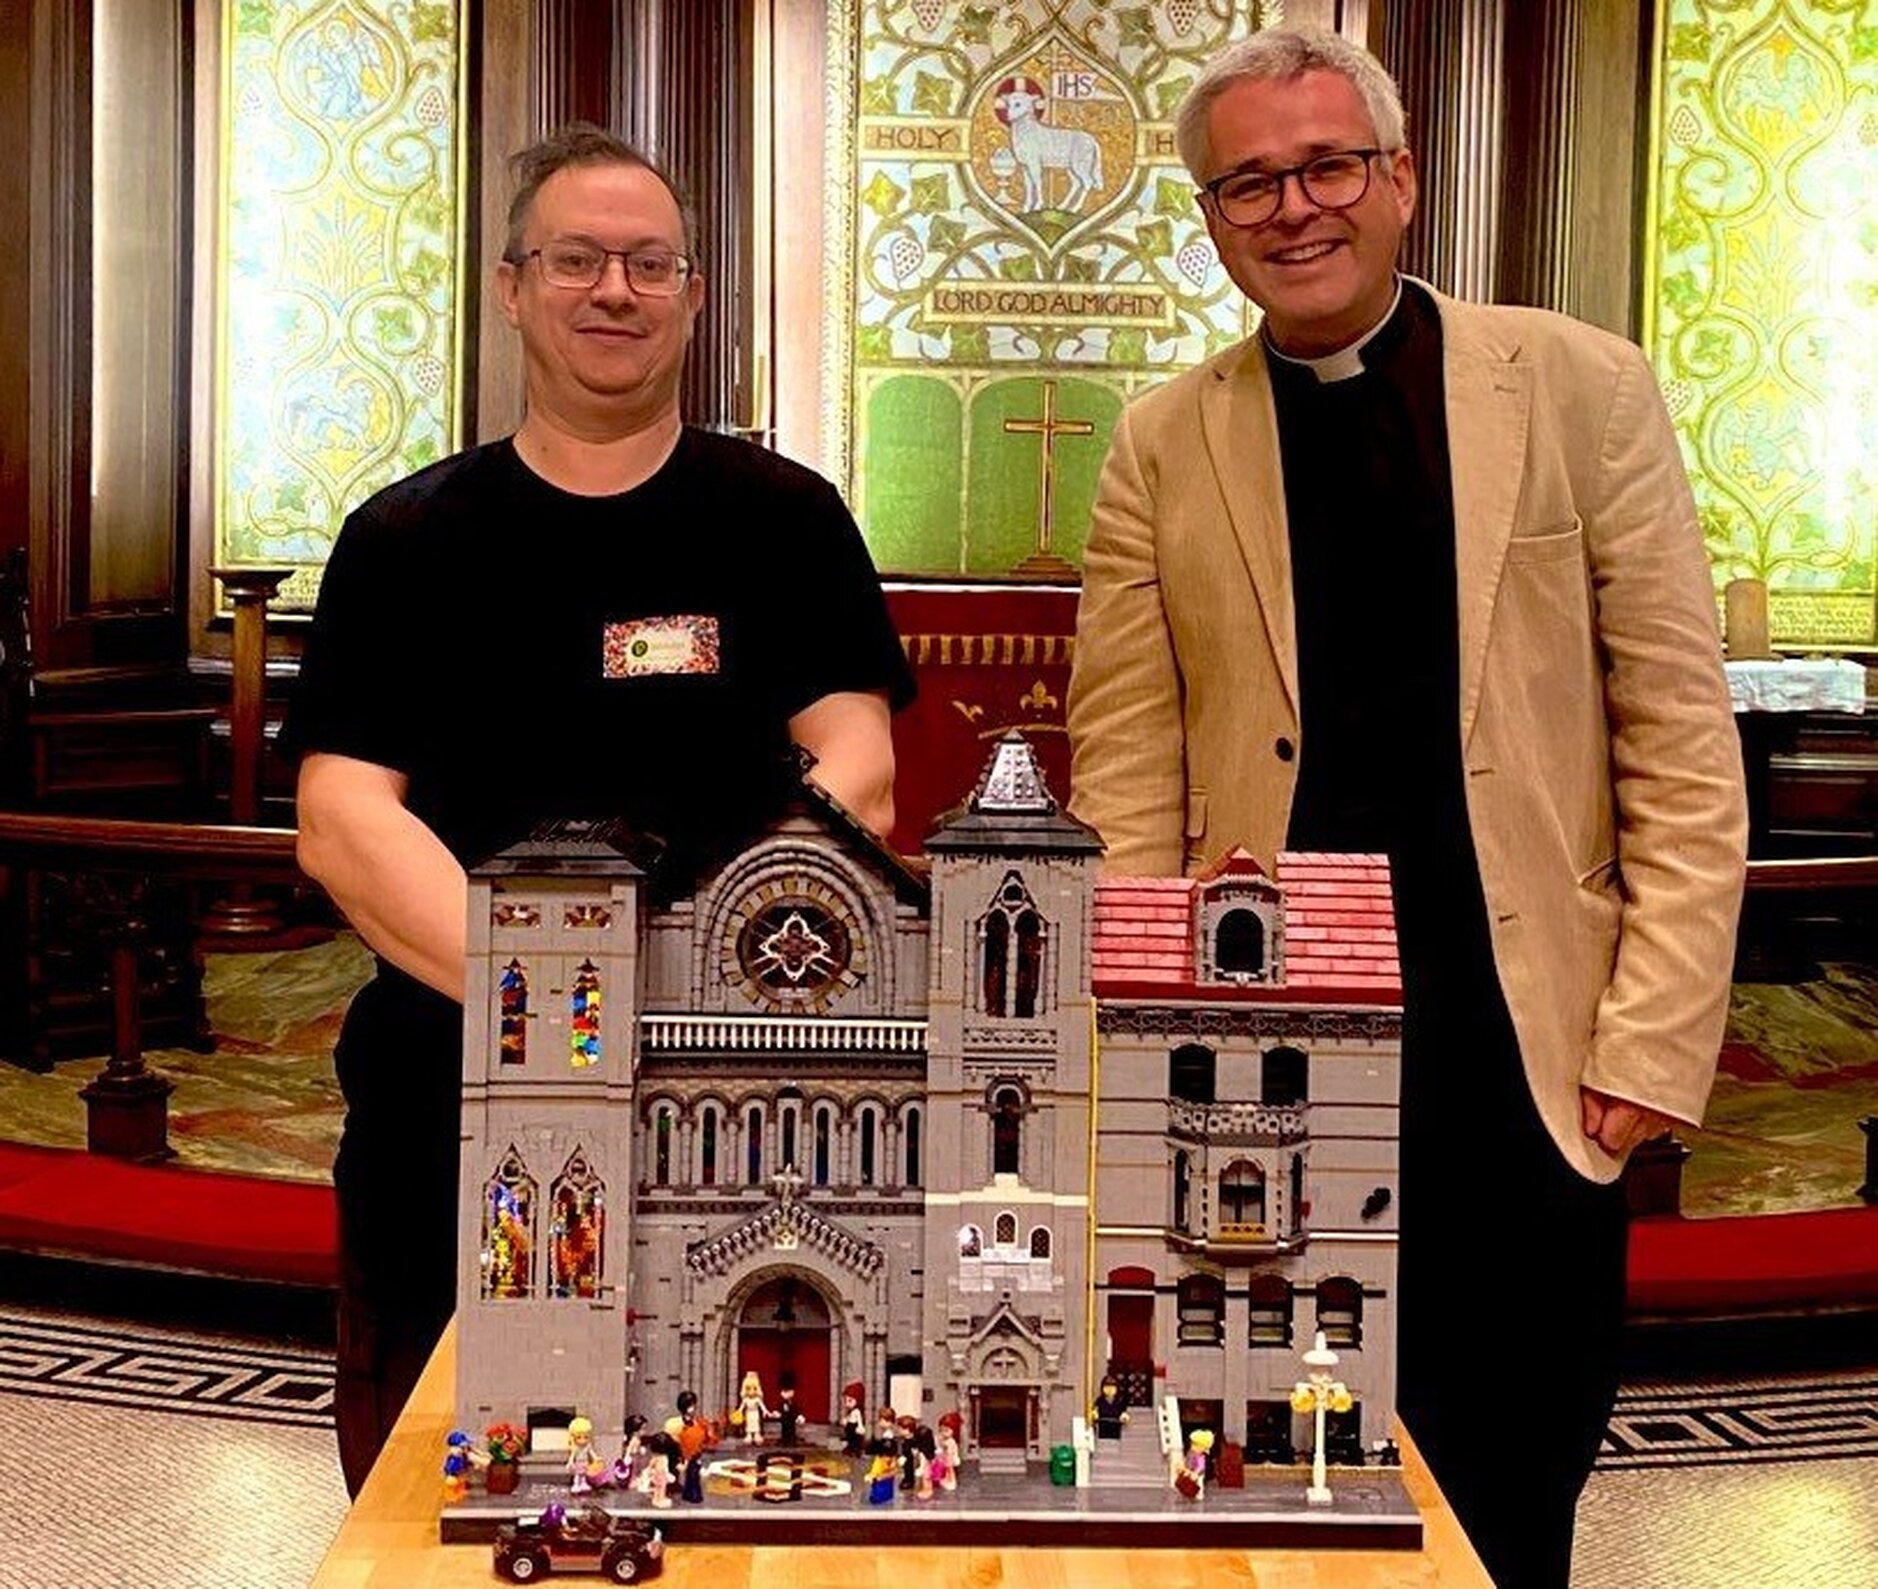 St Ann’s Church Reproduced in Lego